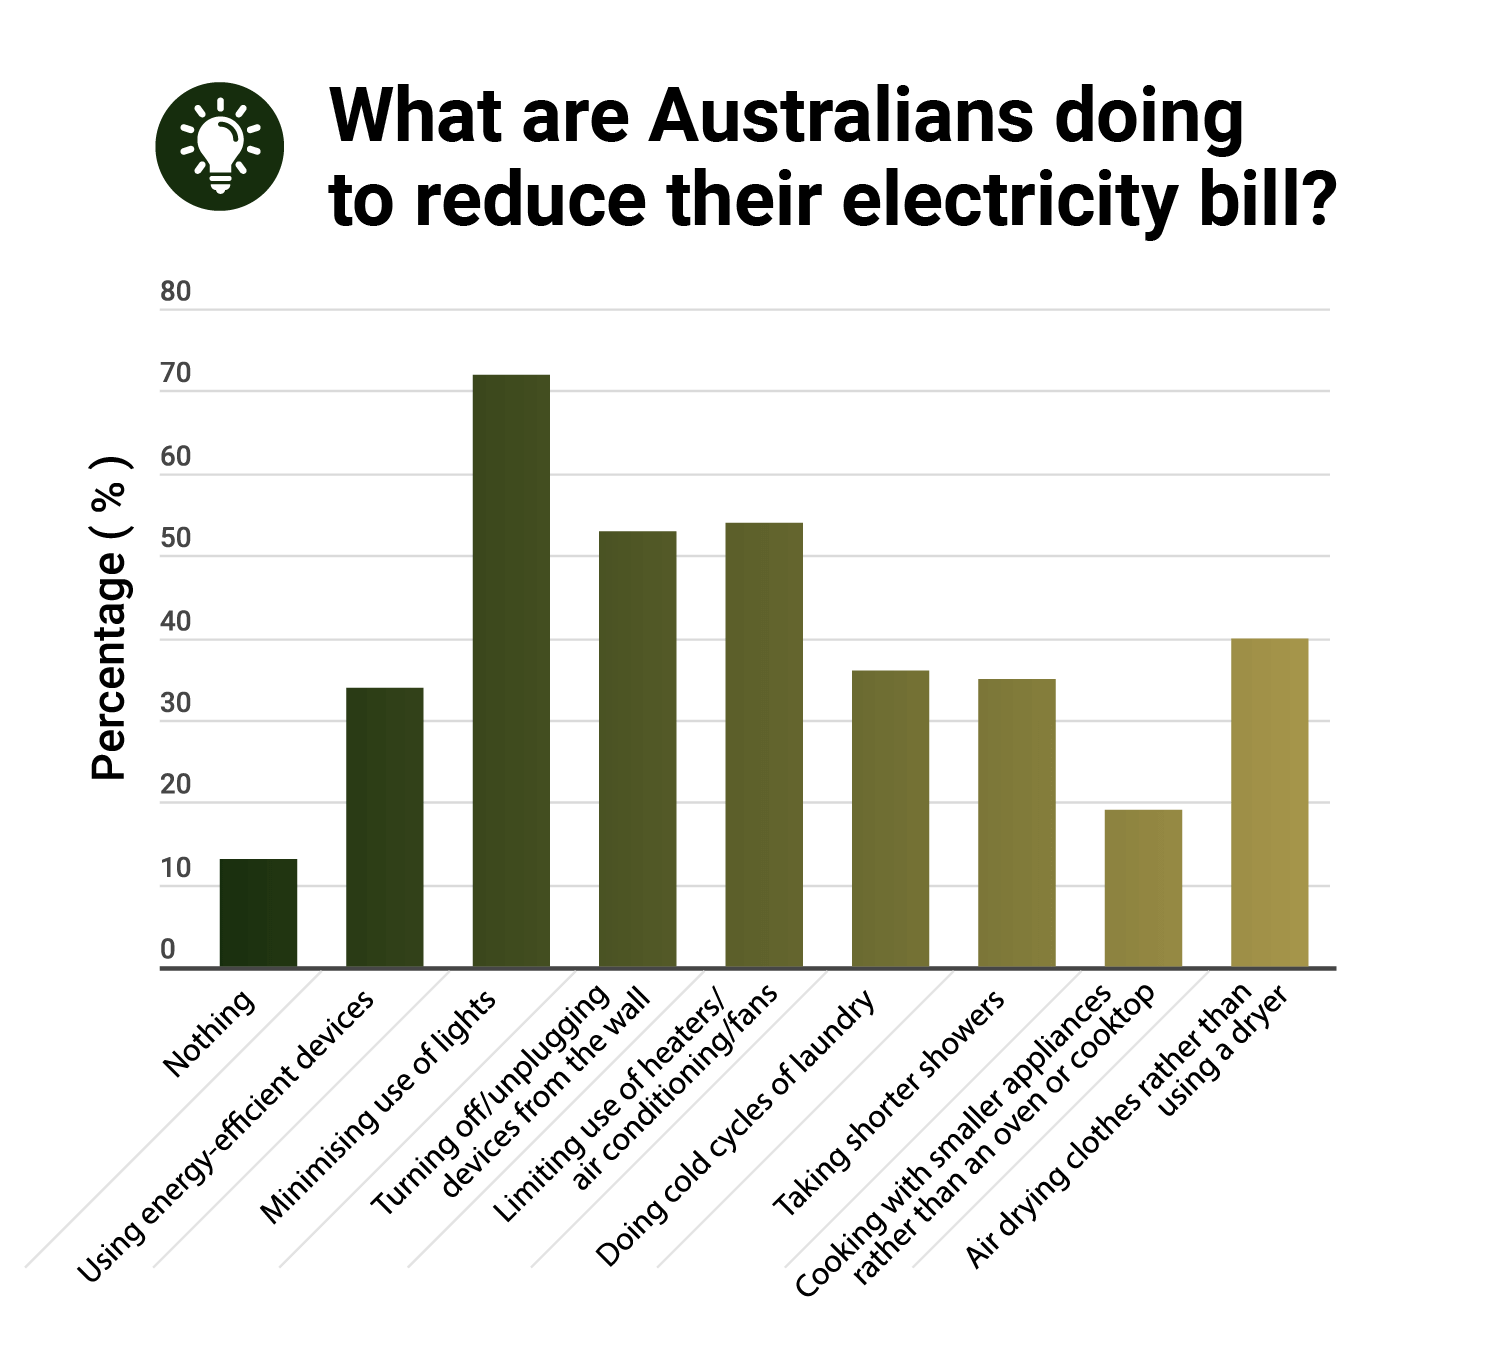 A bar chart showing how Australians combat electricity bills